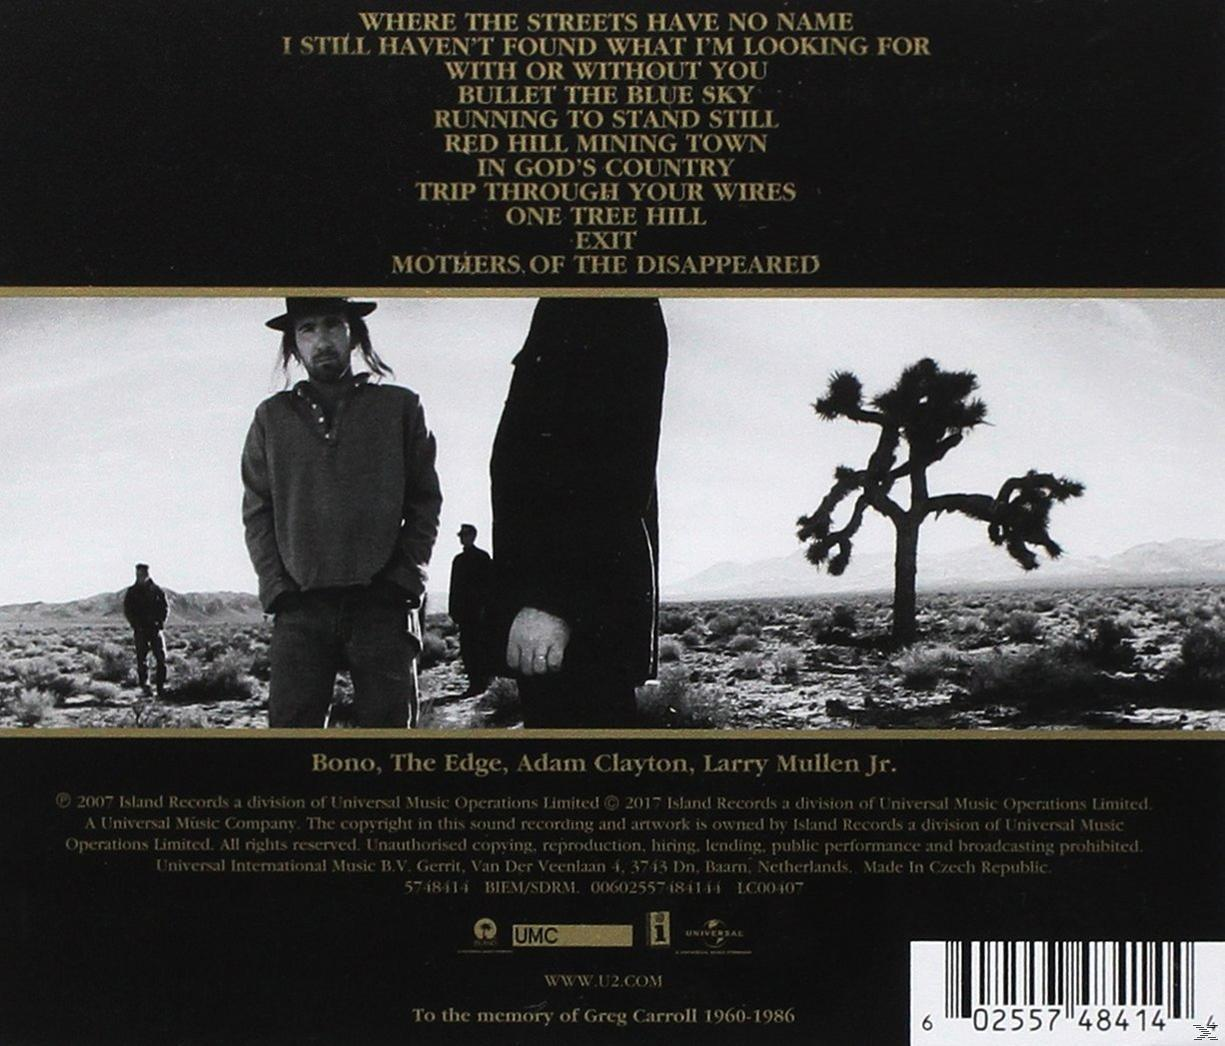 U2 - The Joshua Tree Anniversary - (CD) - 30th